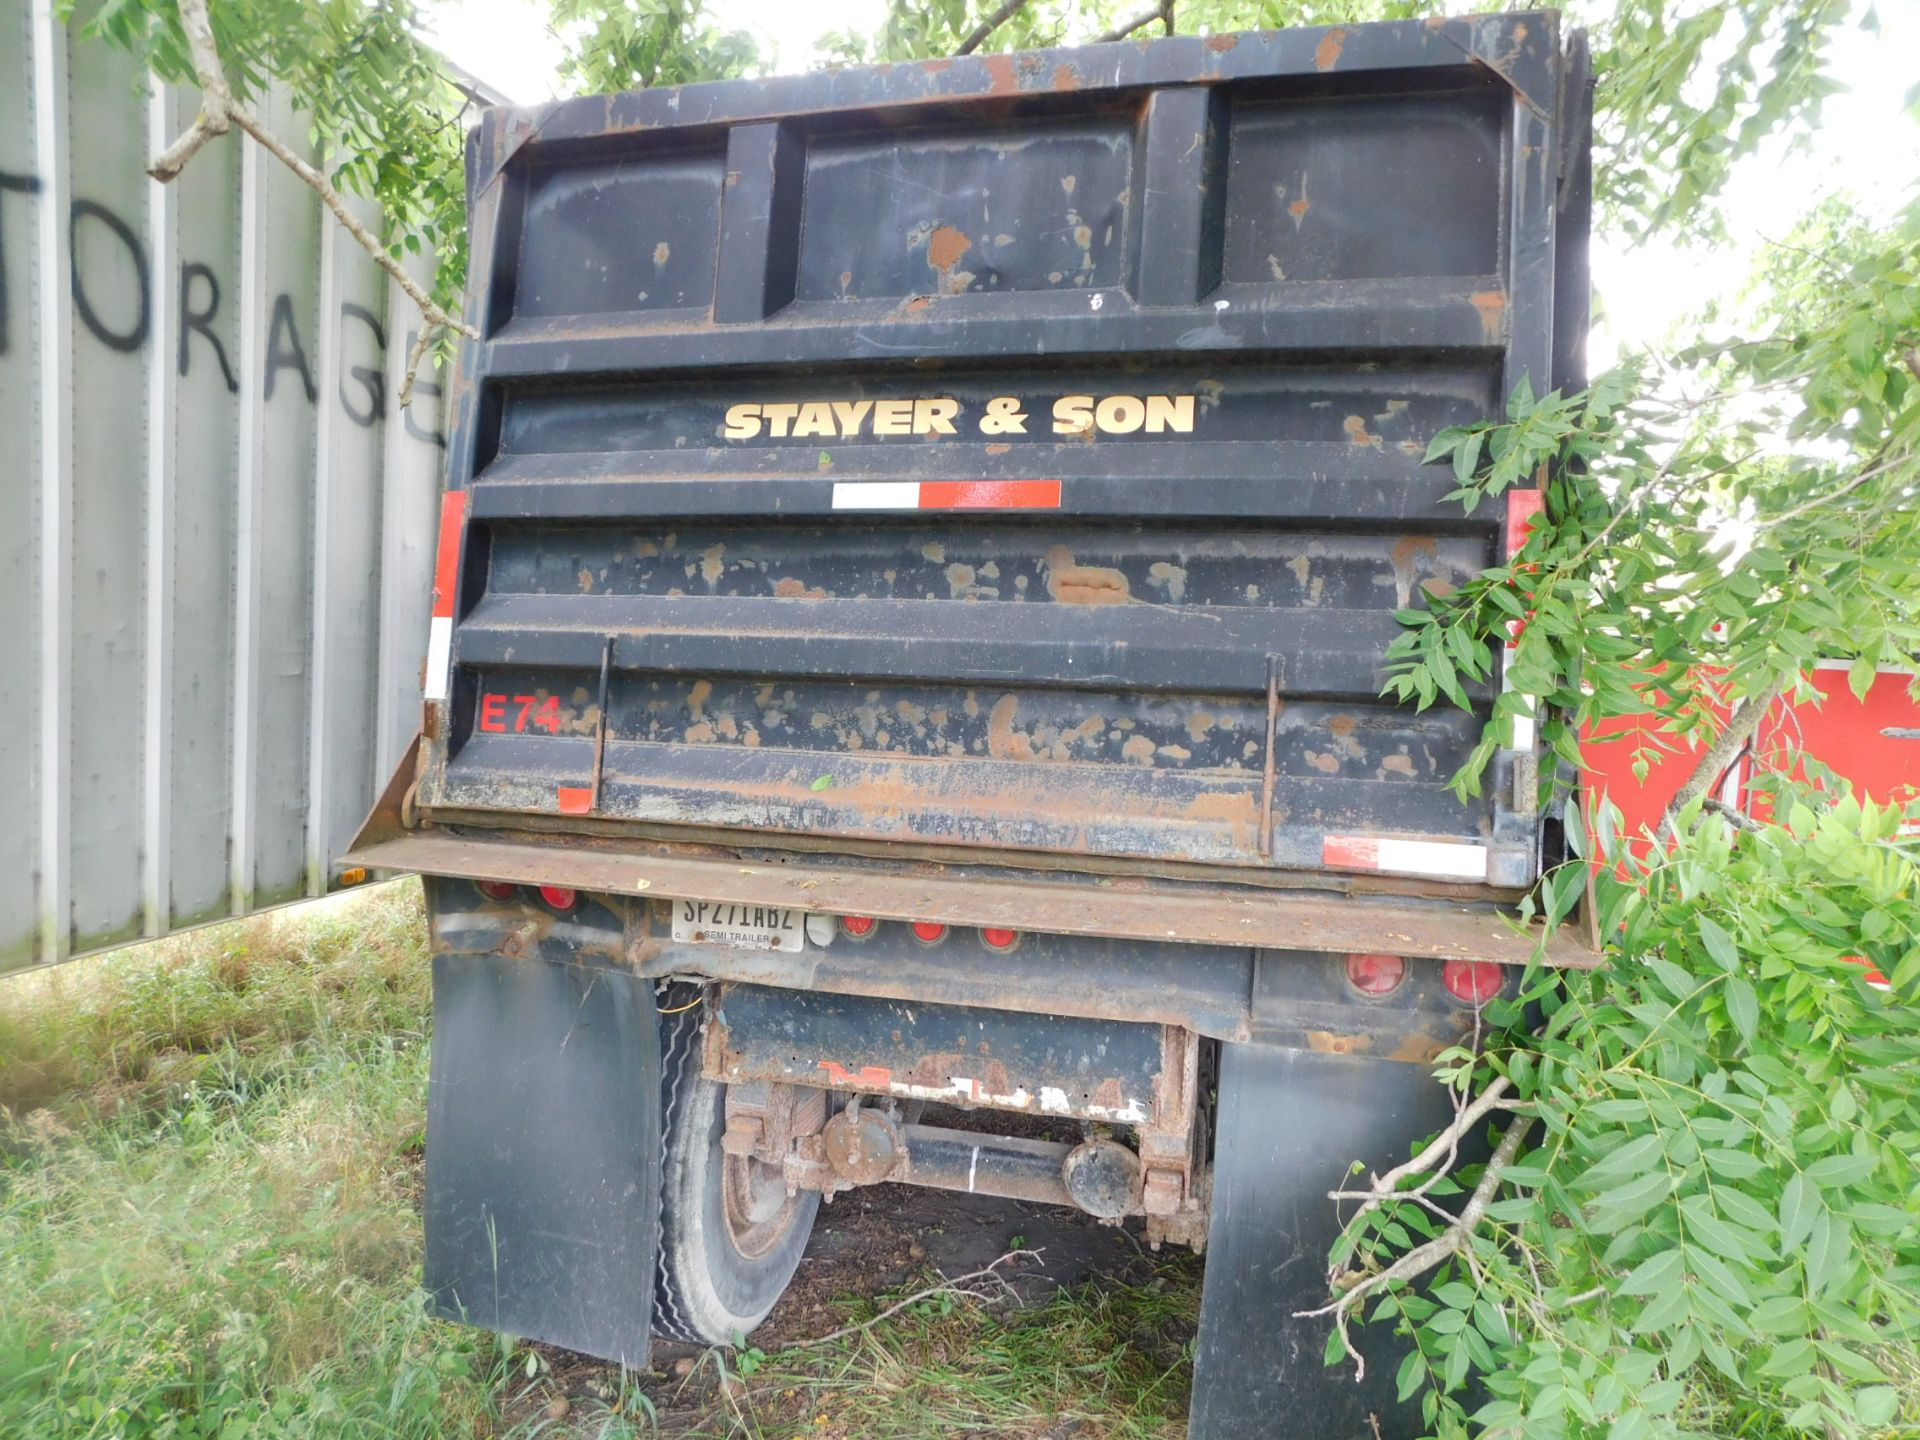 Fruehauf Tandem Axle Semi-Dump Trailer, VIN N/A, 20' Dump Bed ( NO TITLE ) - Image 3 of 17